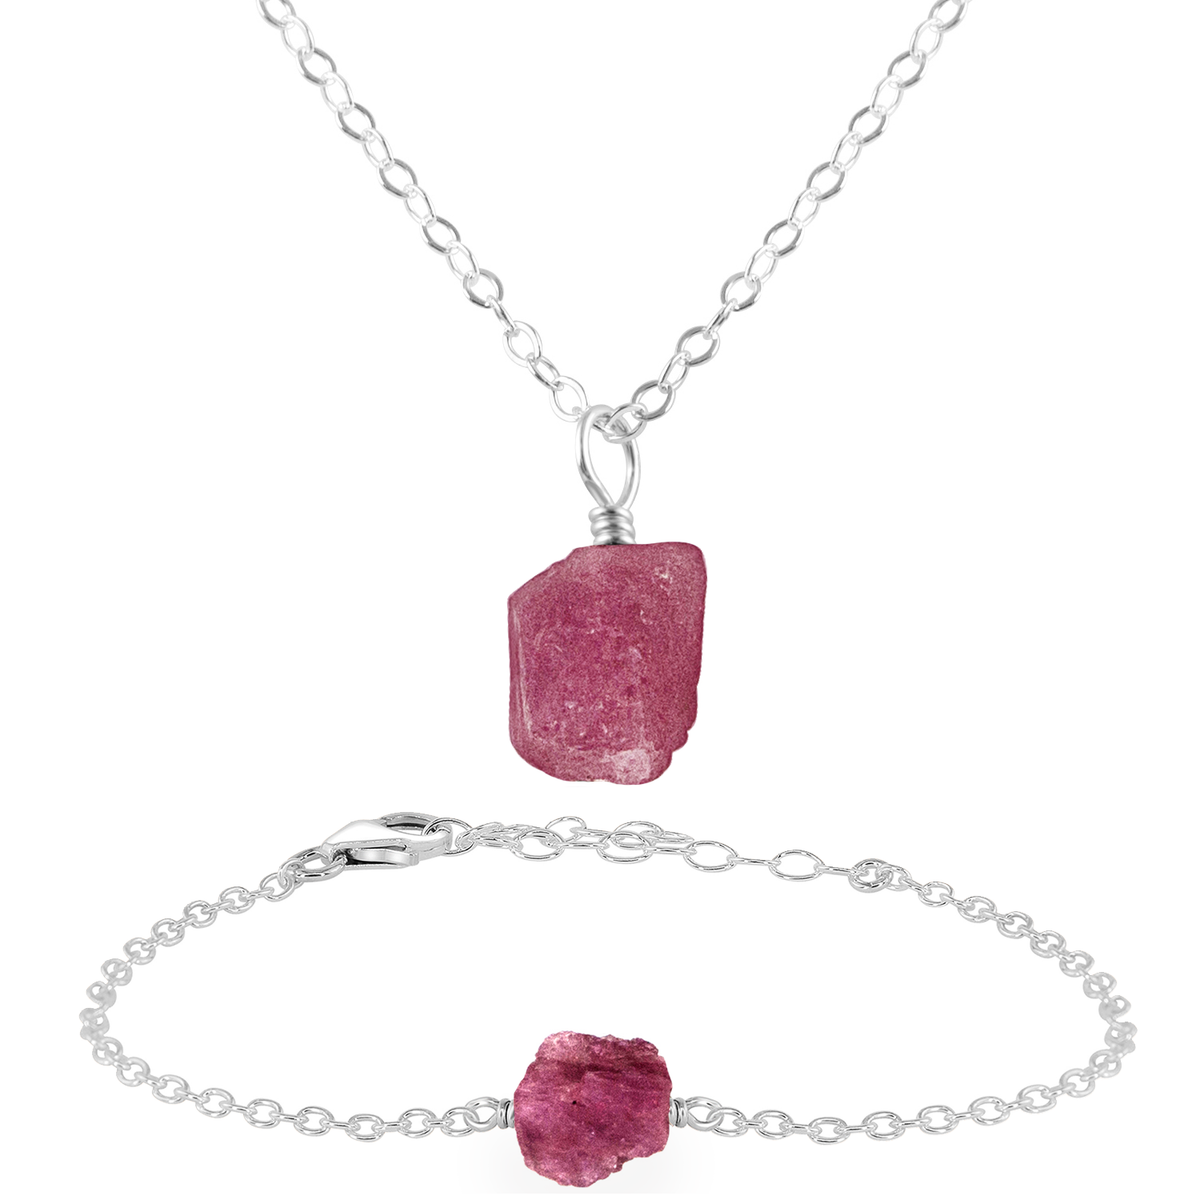 Raw Pink Tourmaline Crystal Jewellery Set - Raw Pink Tourmaline Crystal Jewellery Set - Sterling Silver / Cable / Necklace & Bracelet - Luna Tide Handmade Crystal Jewellery